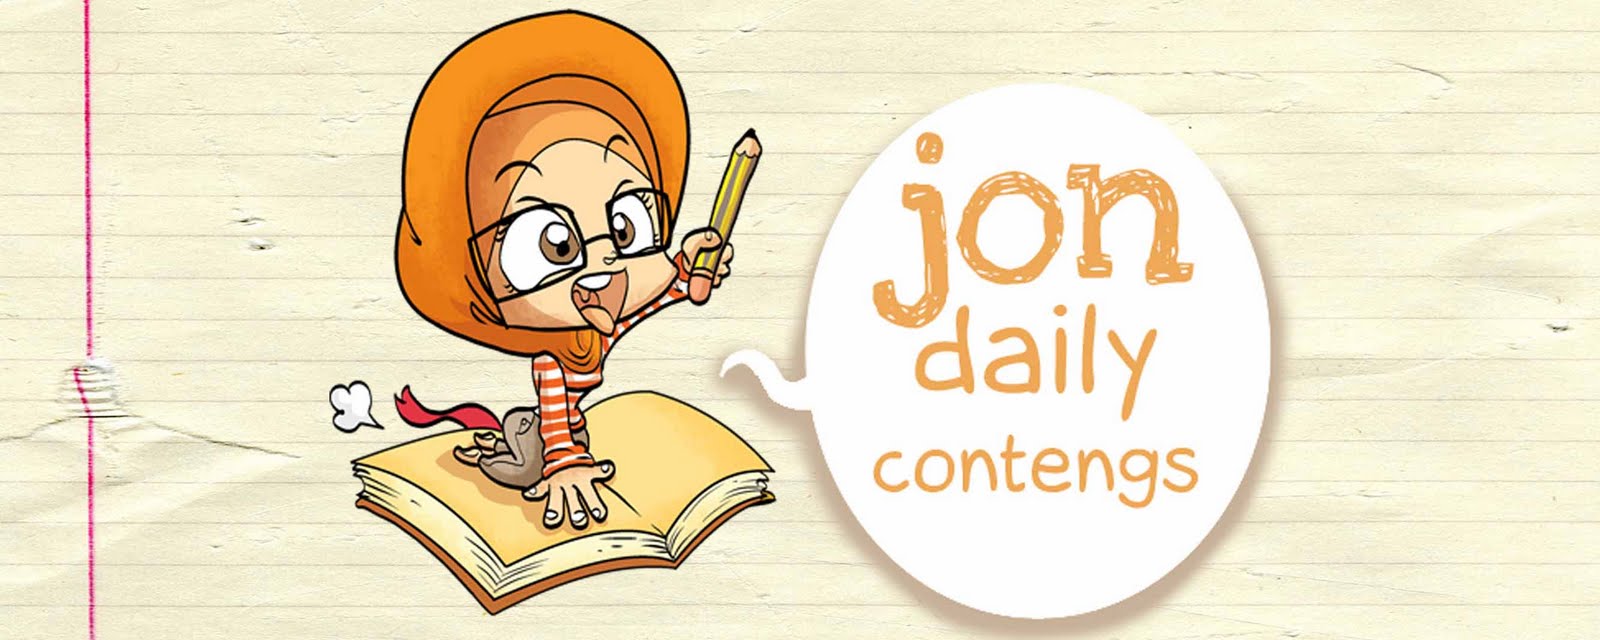 Jon Daily contengs